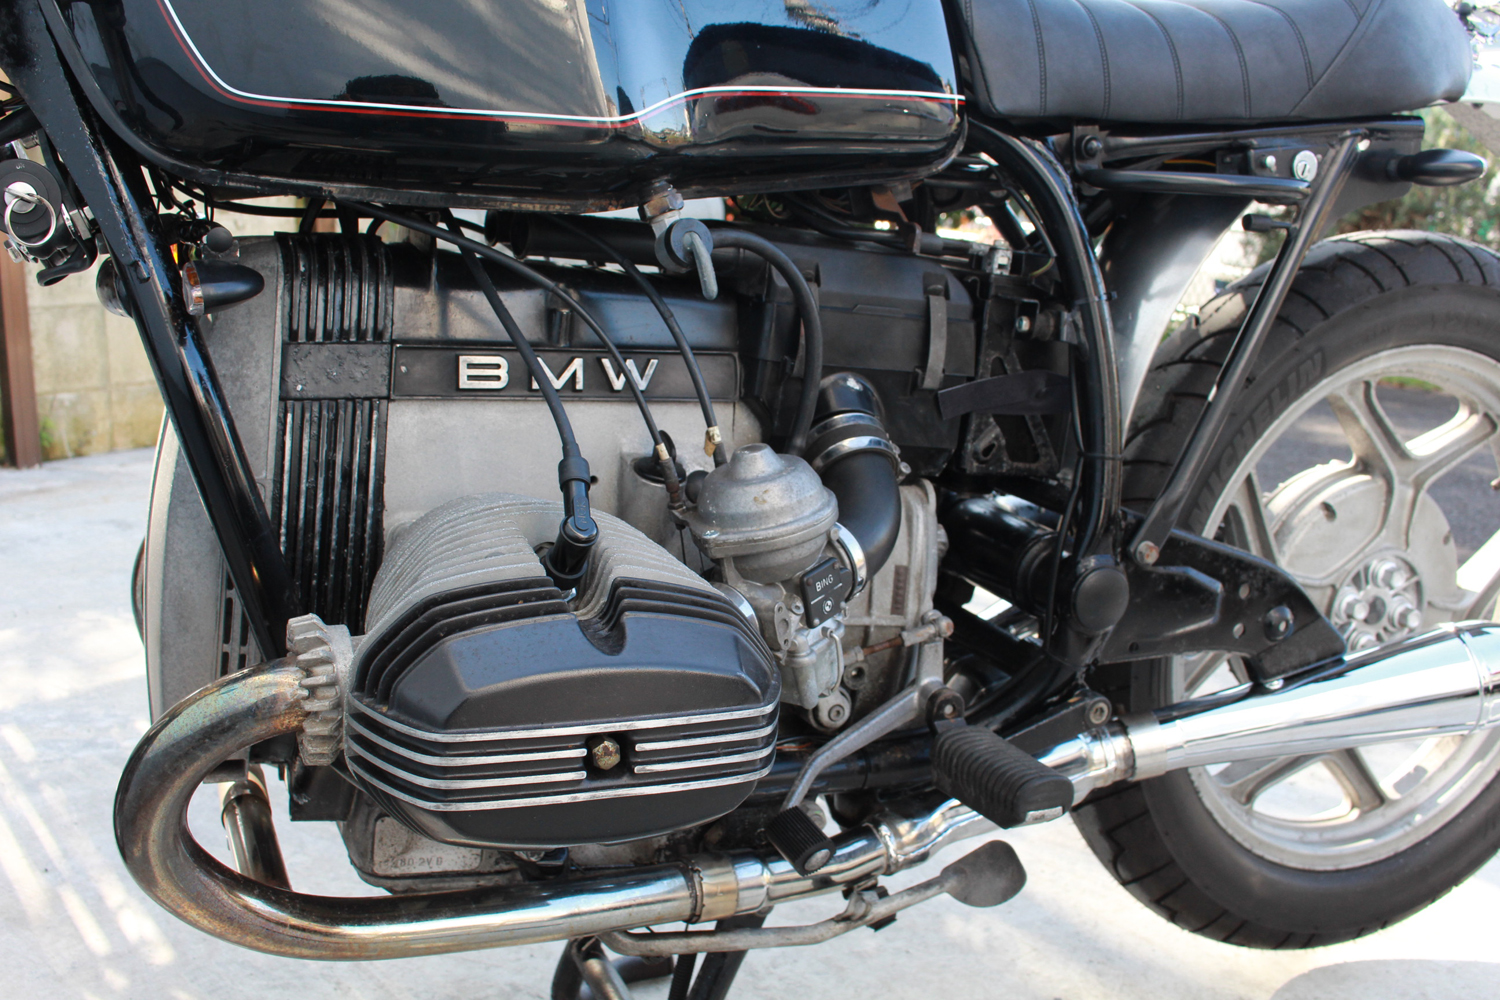 R80 モノレバー 中古車 カスタム | outLoud motorcycle BMW R100